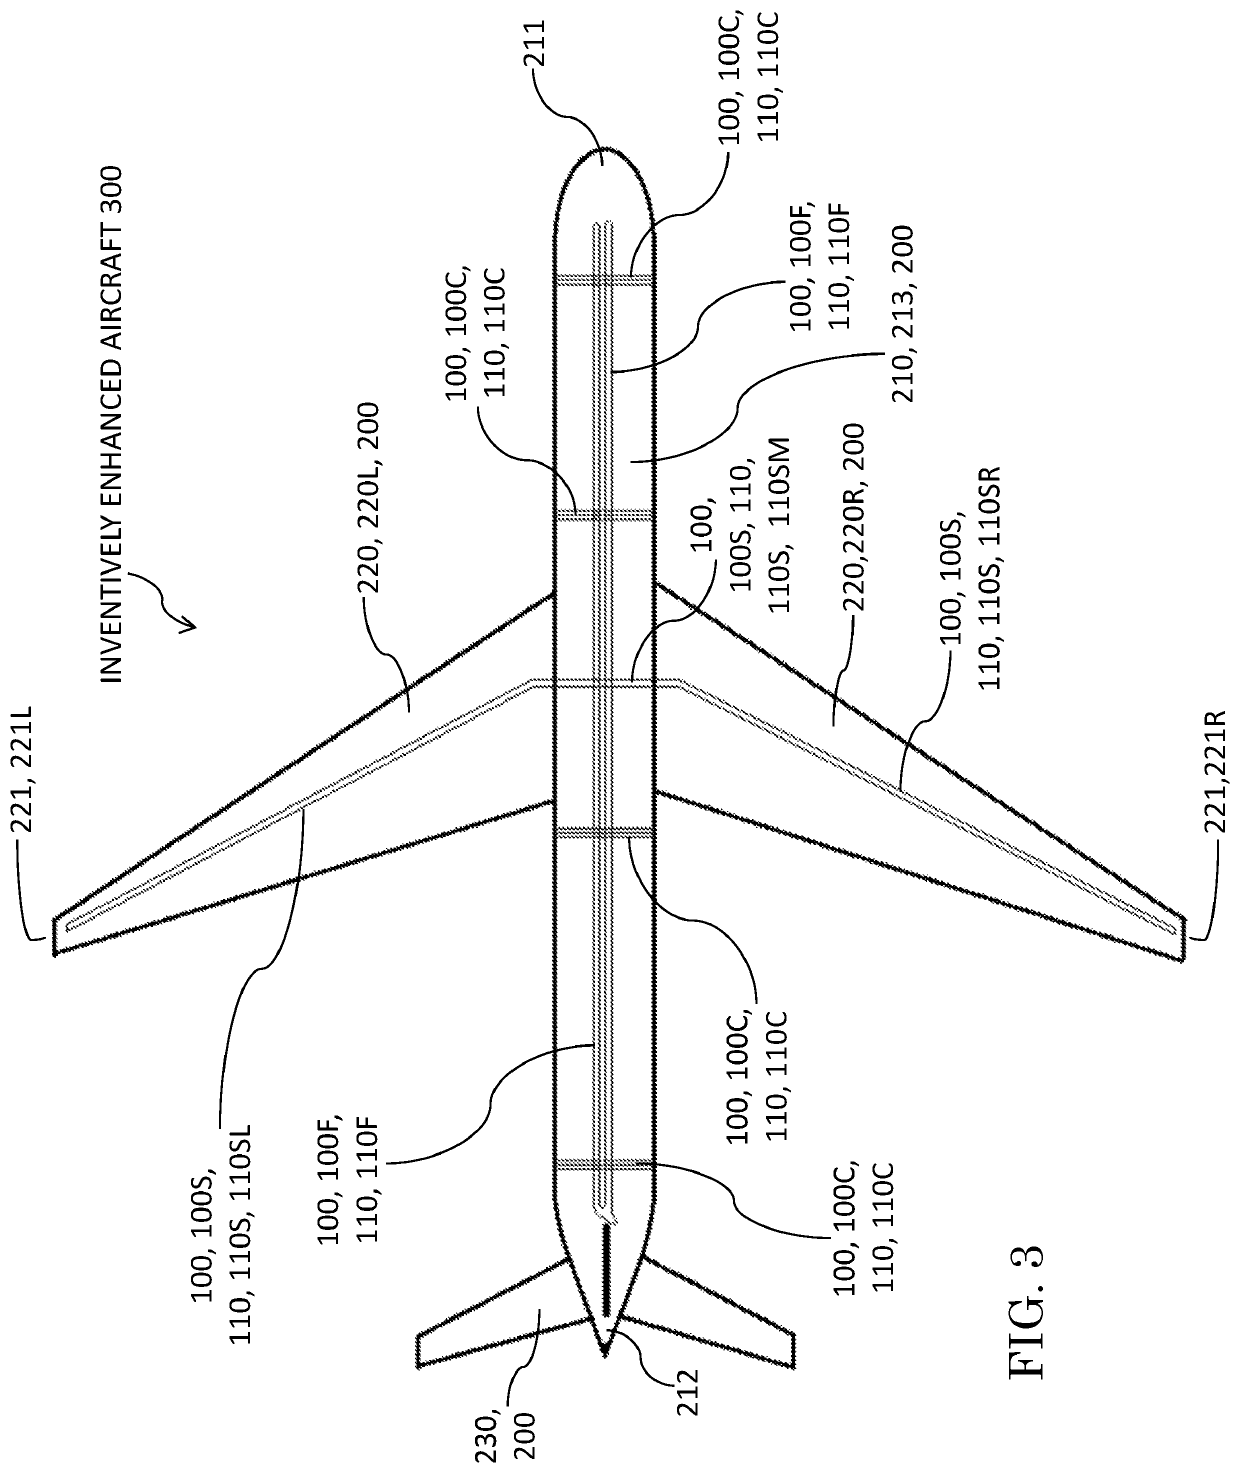 Atmospheric infrasonic sensing from an aircraft